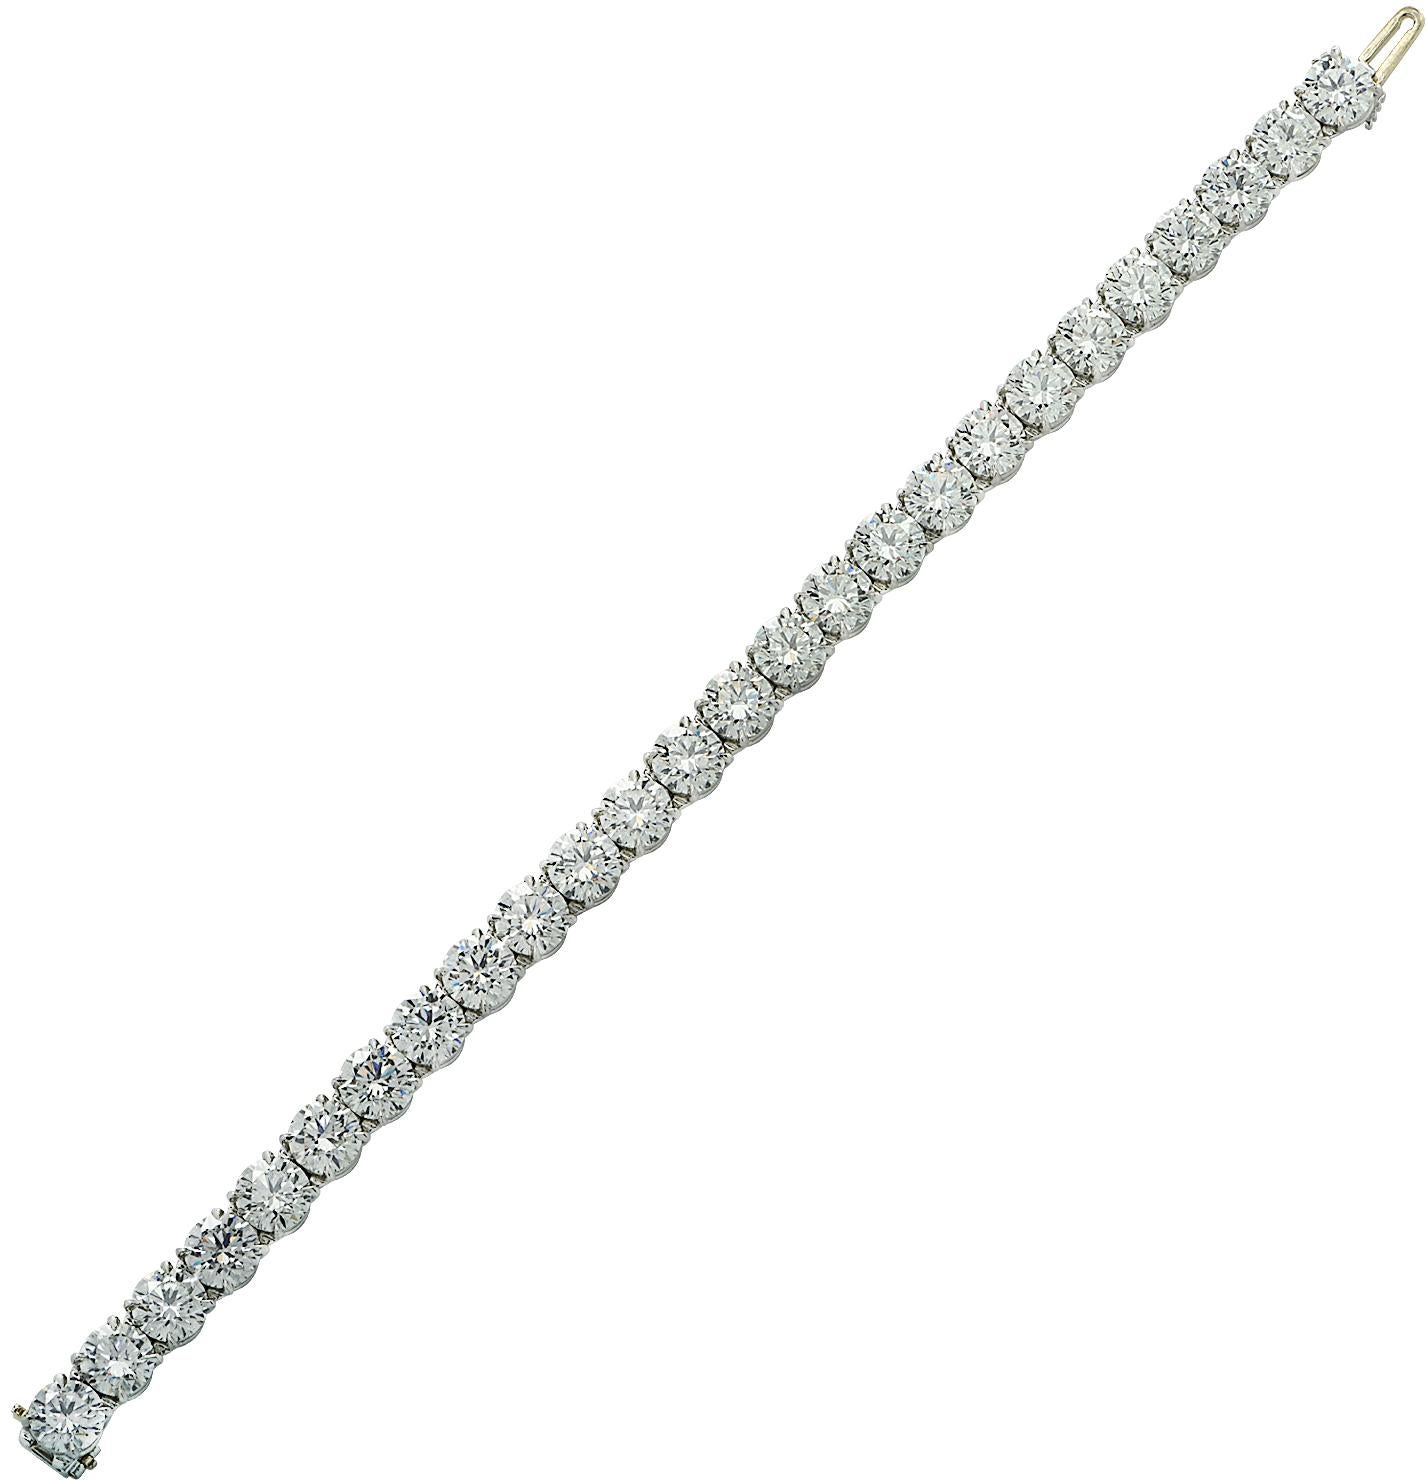 Round Cut Vivid Diamonds GIA Certified 26.78 Carat Diamond Tennis Bracelet For Sale